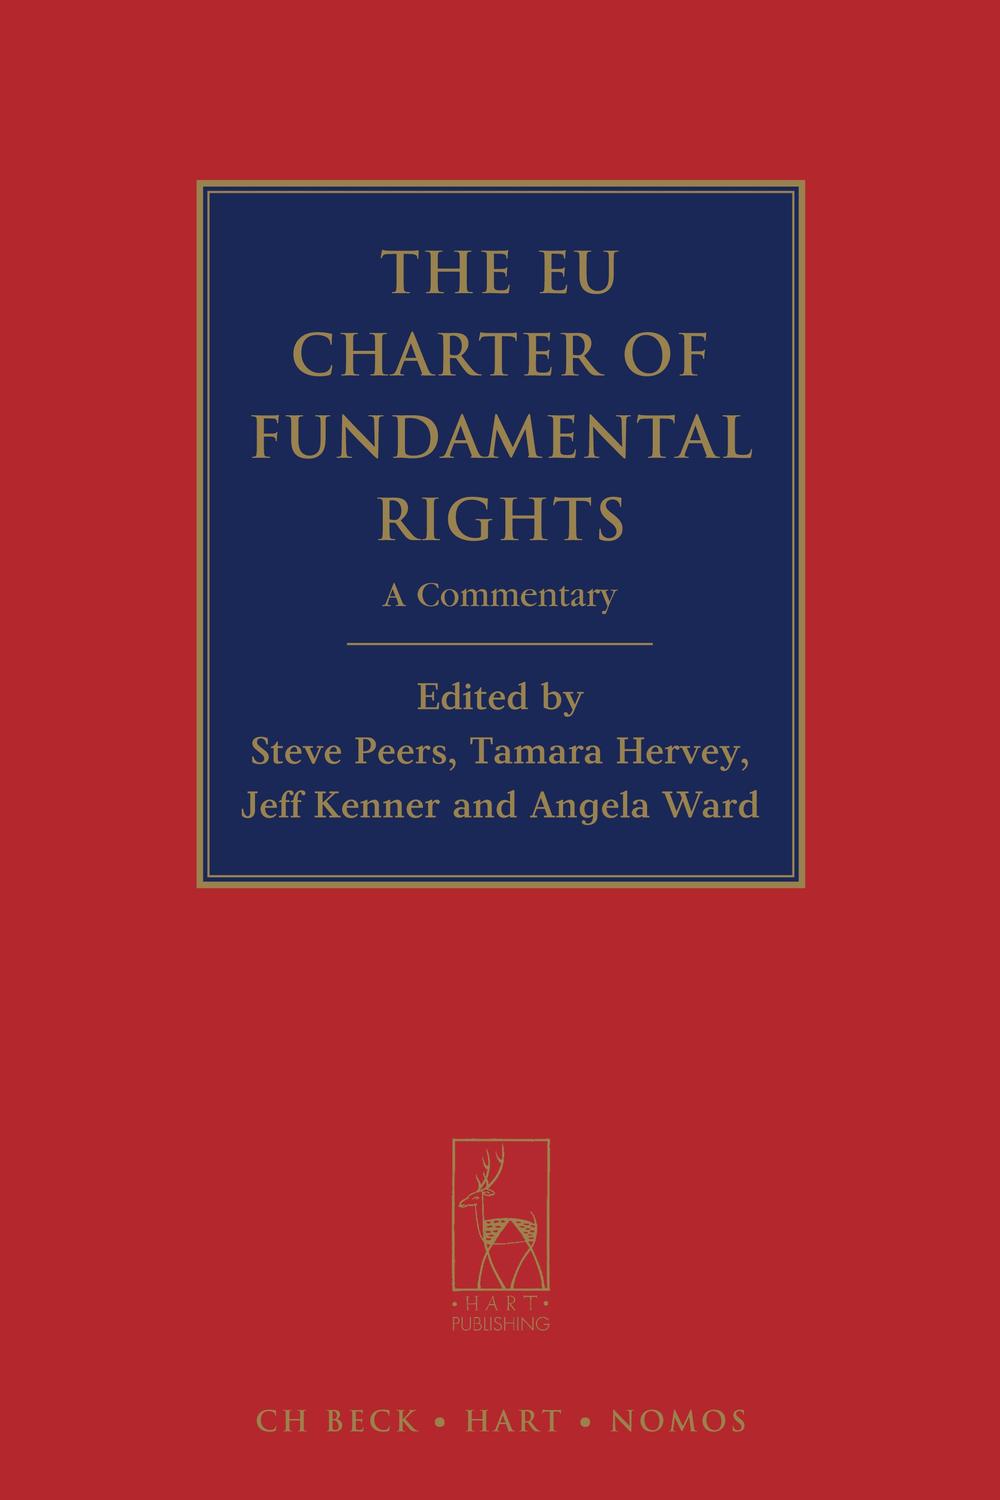 The EU Charter of Fundamental Rights - Steve Peers, Tamara Hervey, Jeff Kenner, Angela Ward